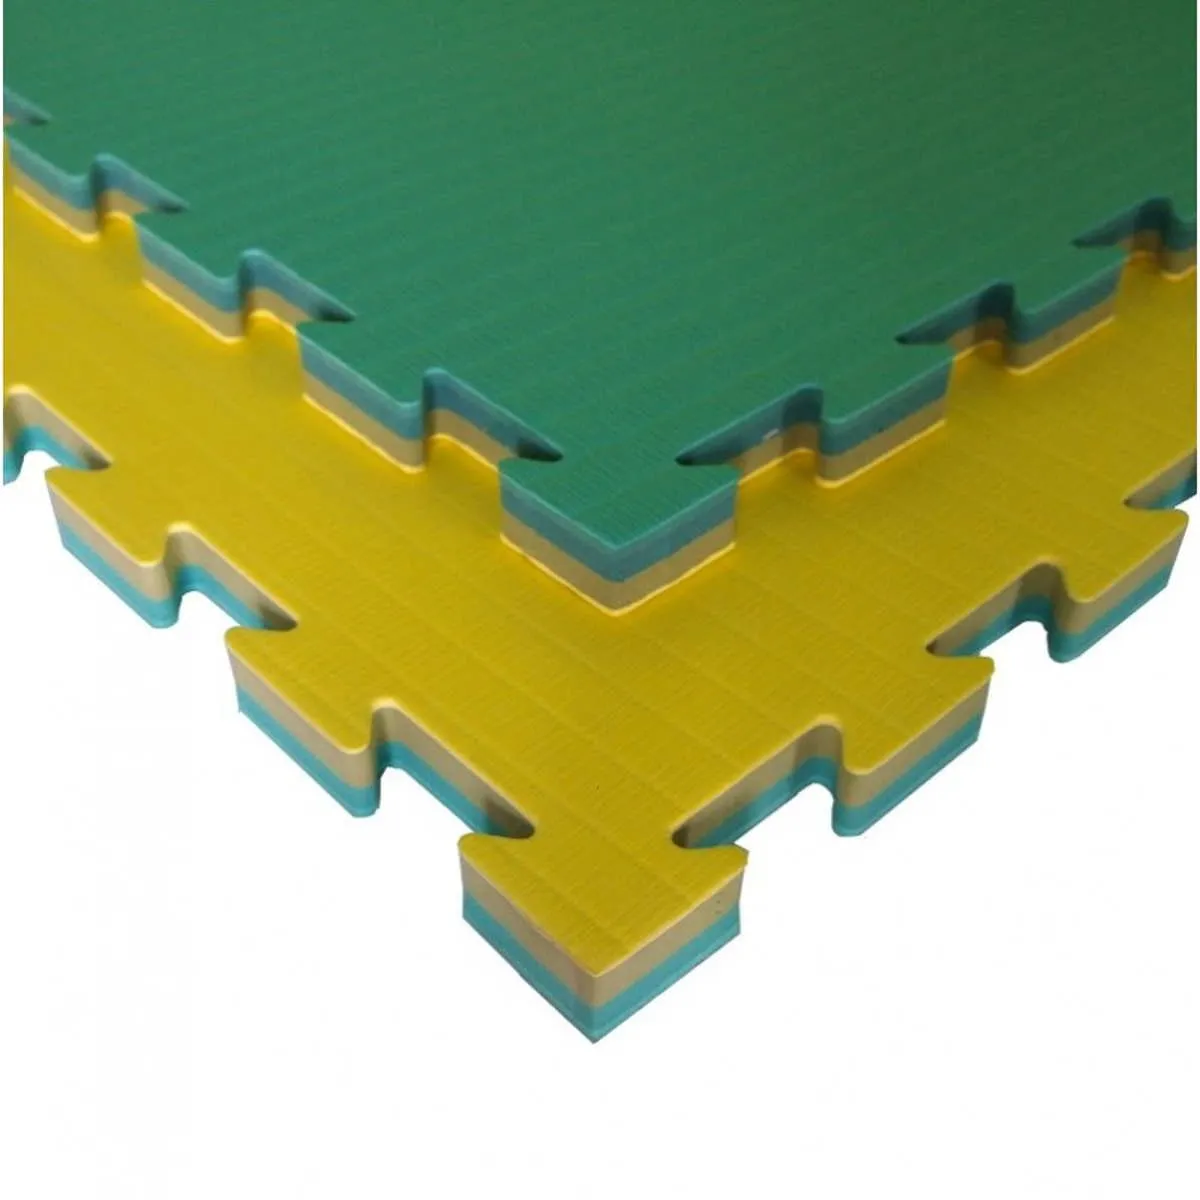 Tatami martial arts mat TJ25X yellow/green 100 cm x 100 cm x 2.5 cm